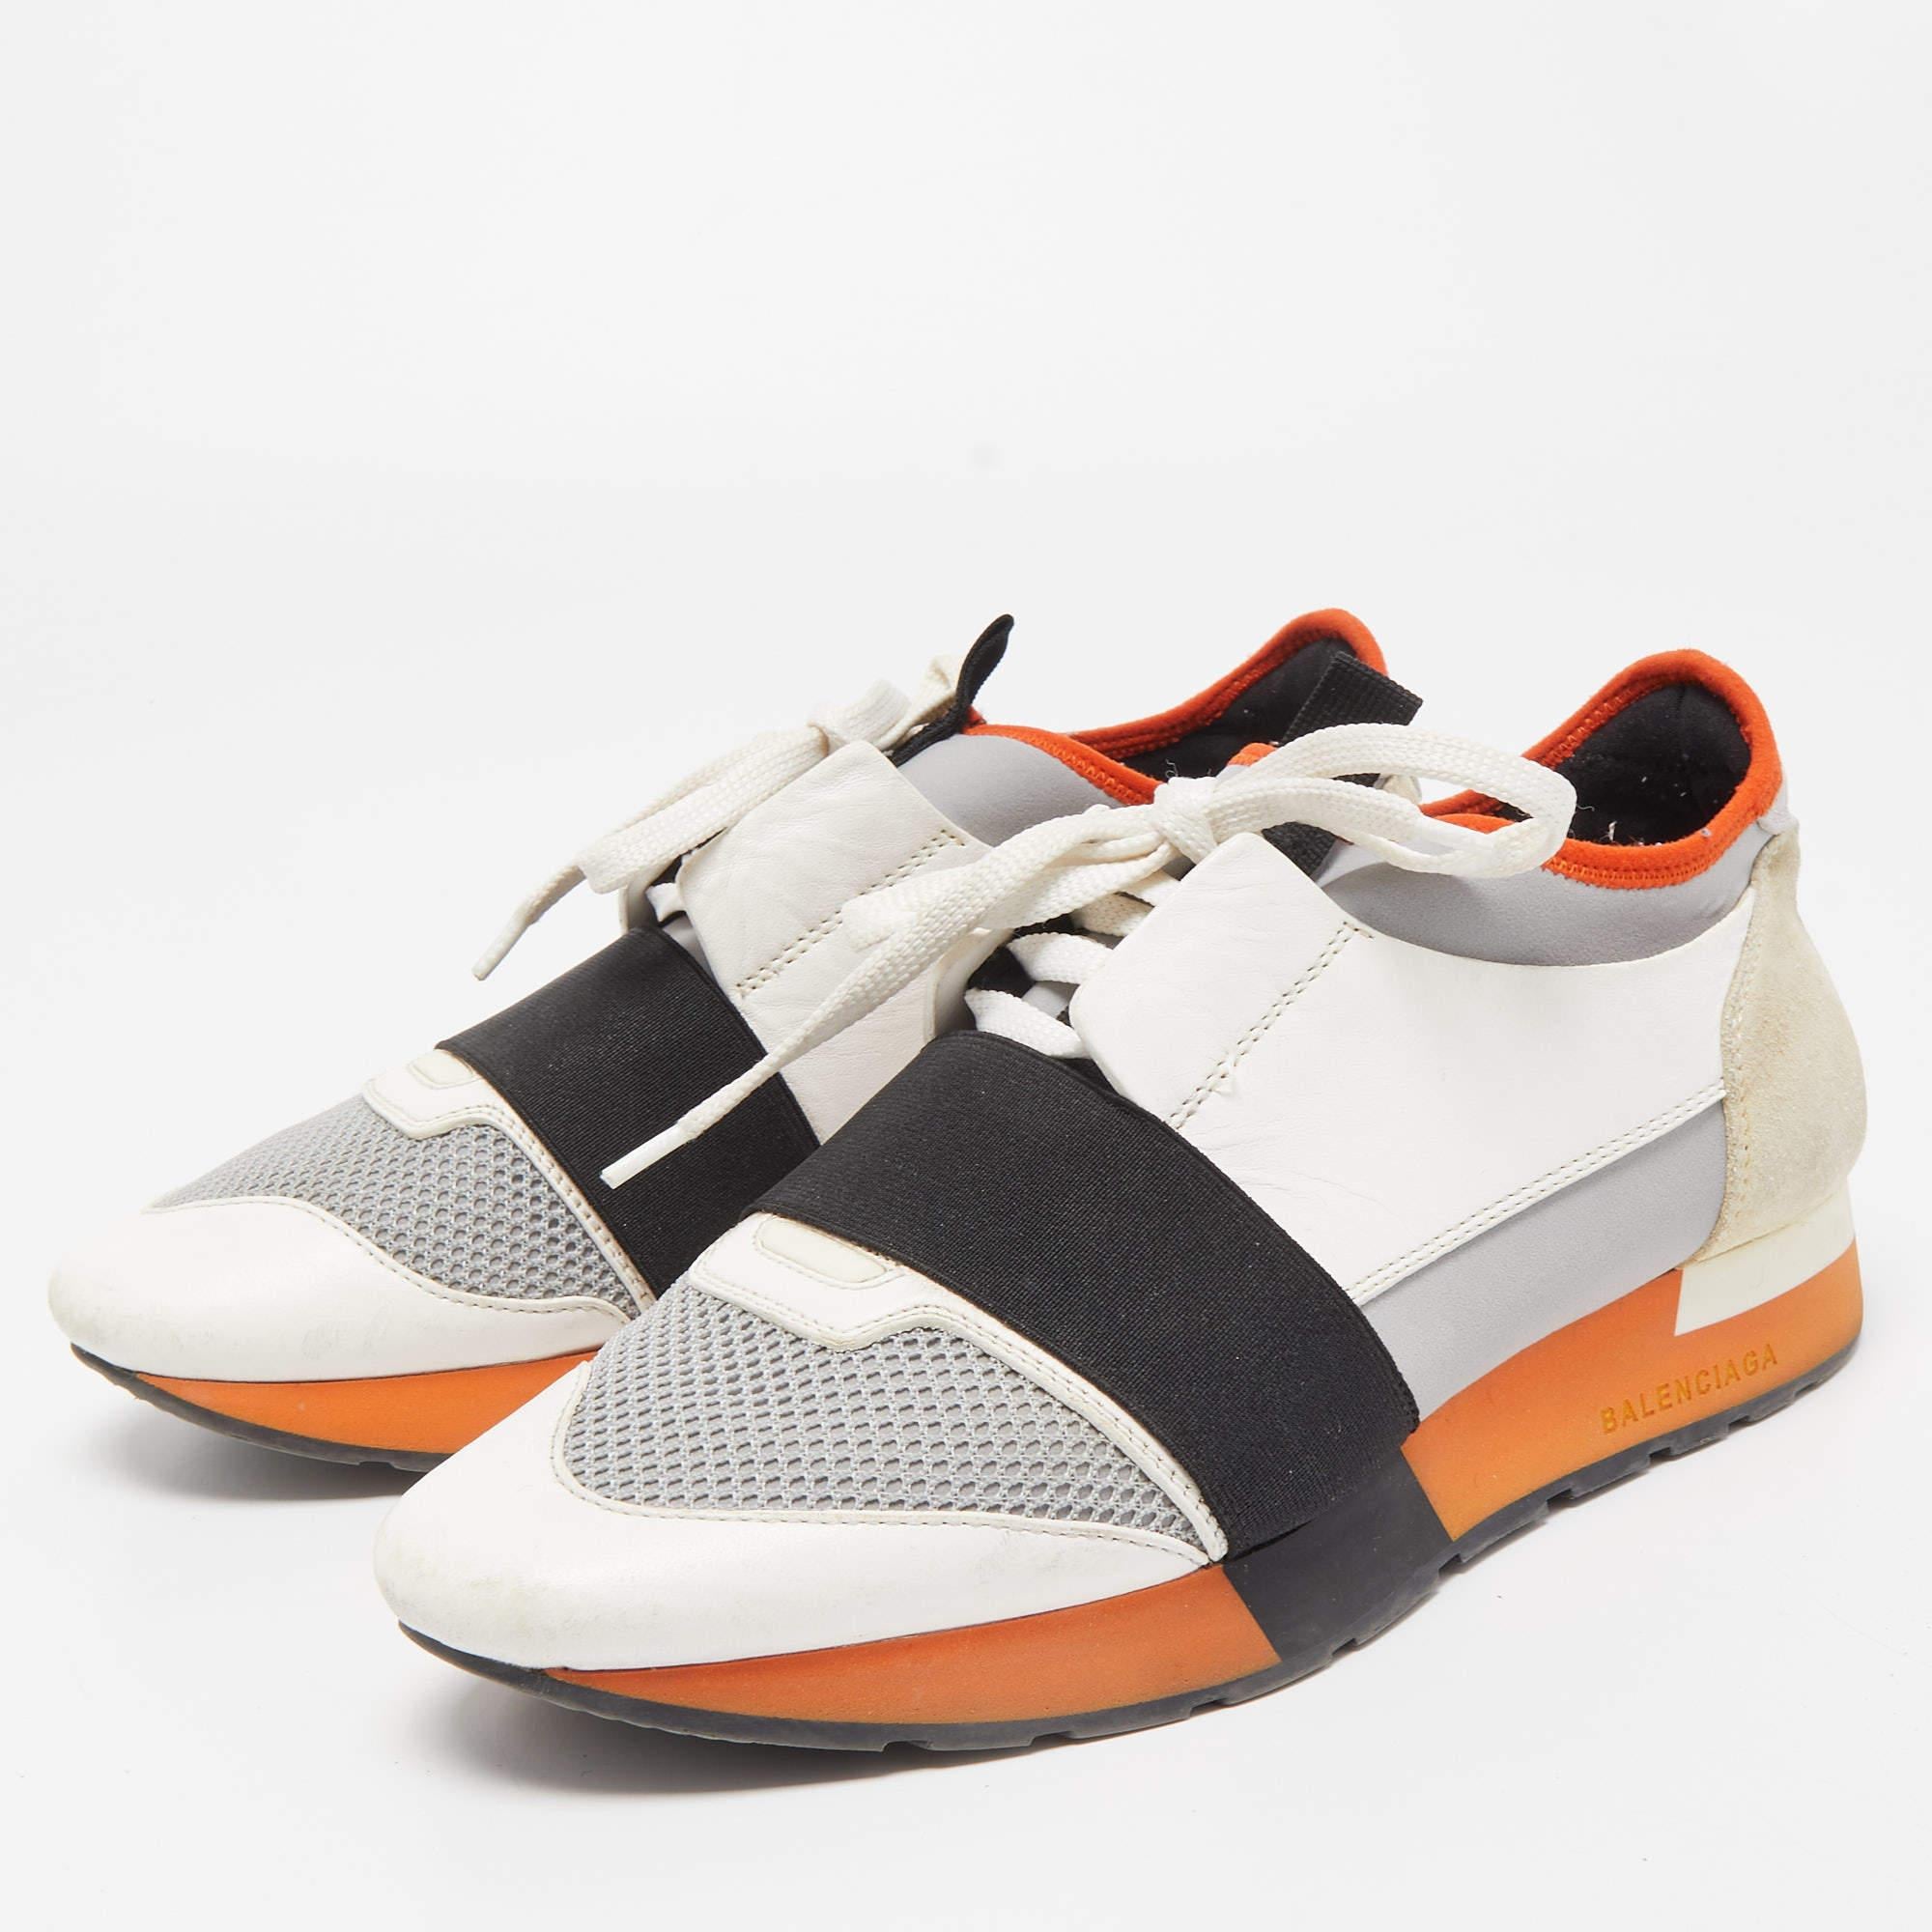 Balenciaga Tricolor Leather and Mesh Race Runner Sneakers Size 40 In Good Condition For Sale In Dubai, Al Qouz 2